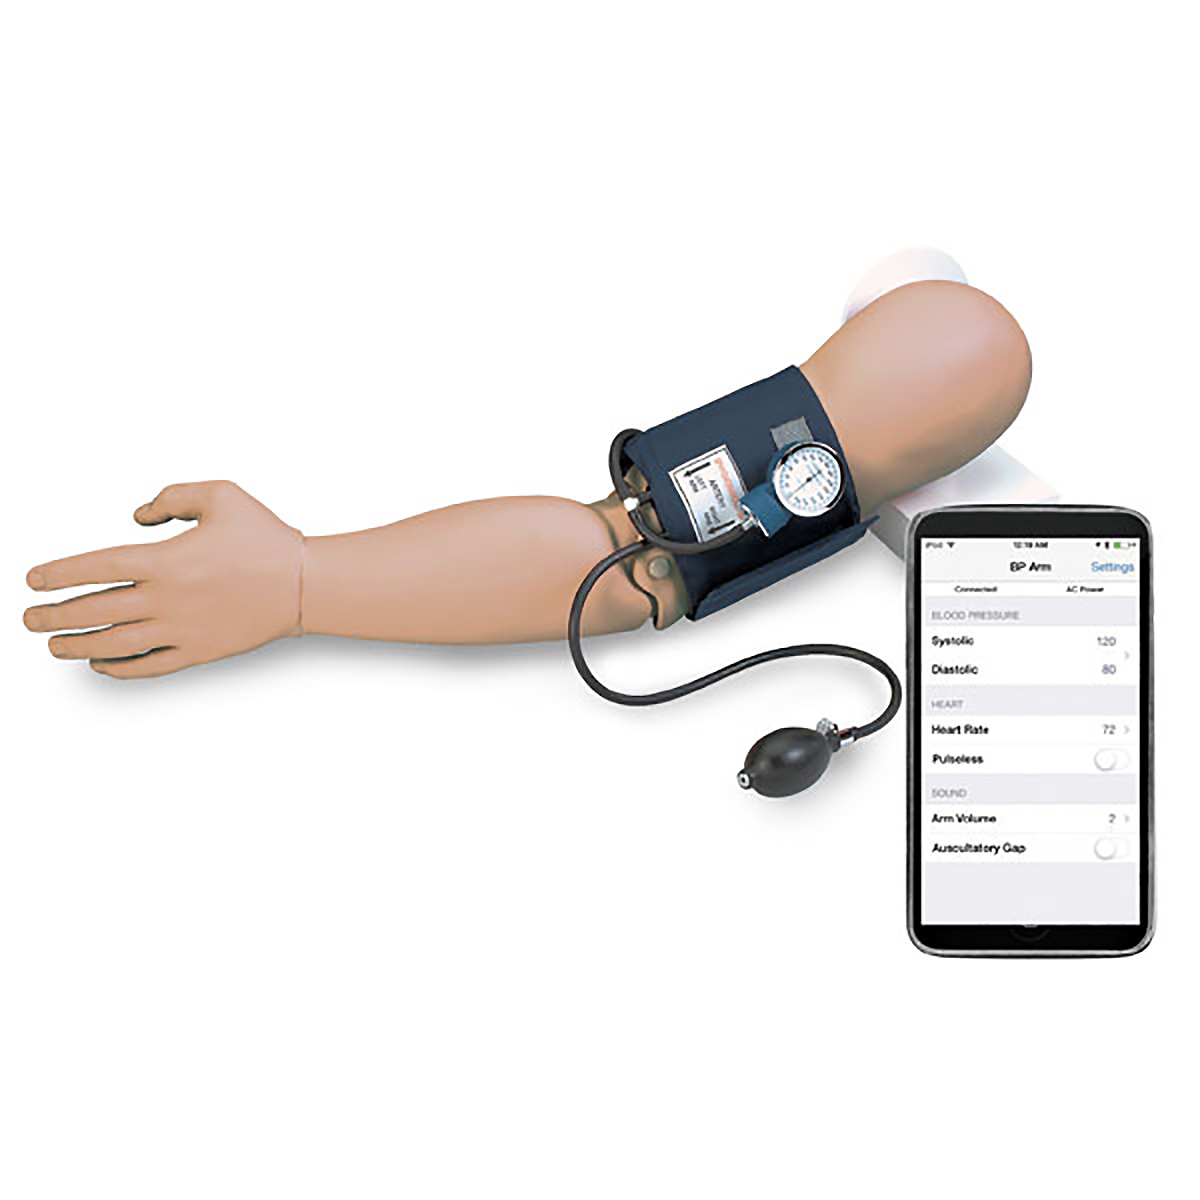 Blutdrucksimulator mit iPod Technologie, Bestellnummer 1018610, R11210, 101-775U_PP00775U_SB50152U, Nasco Simulaids